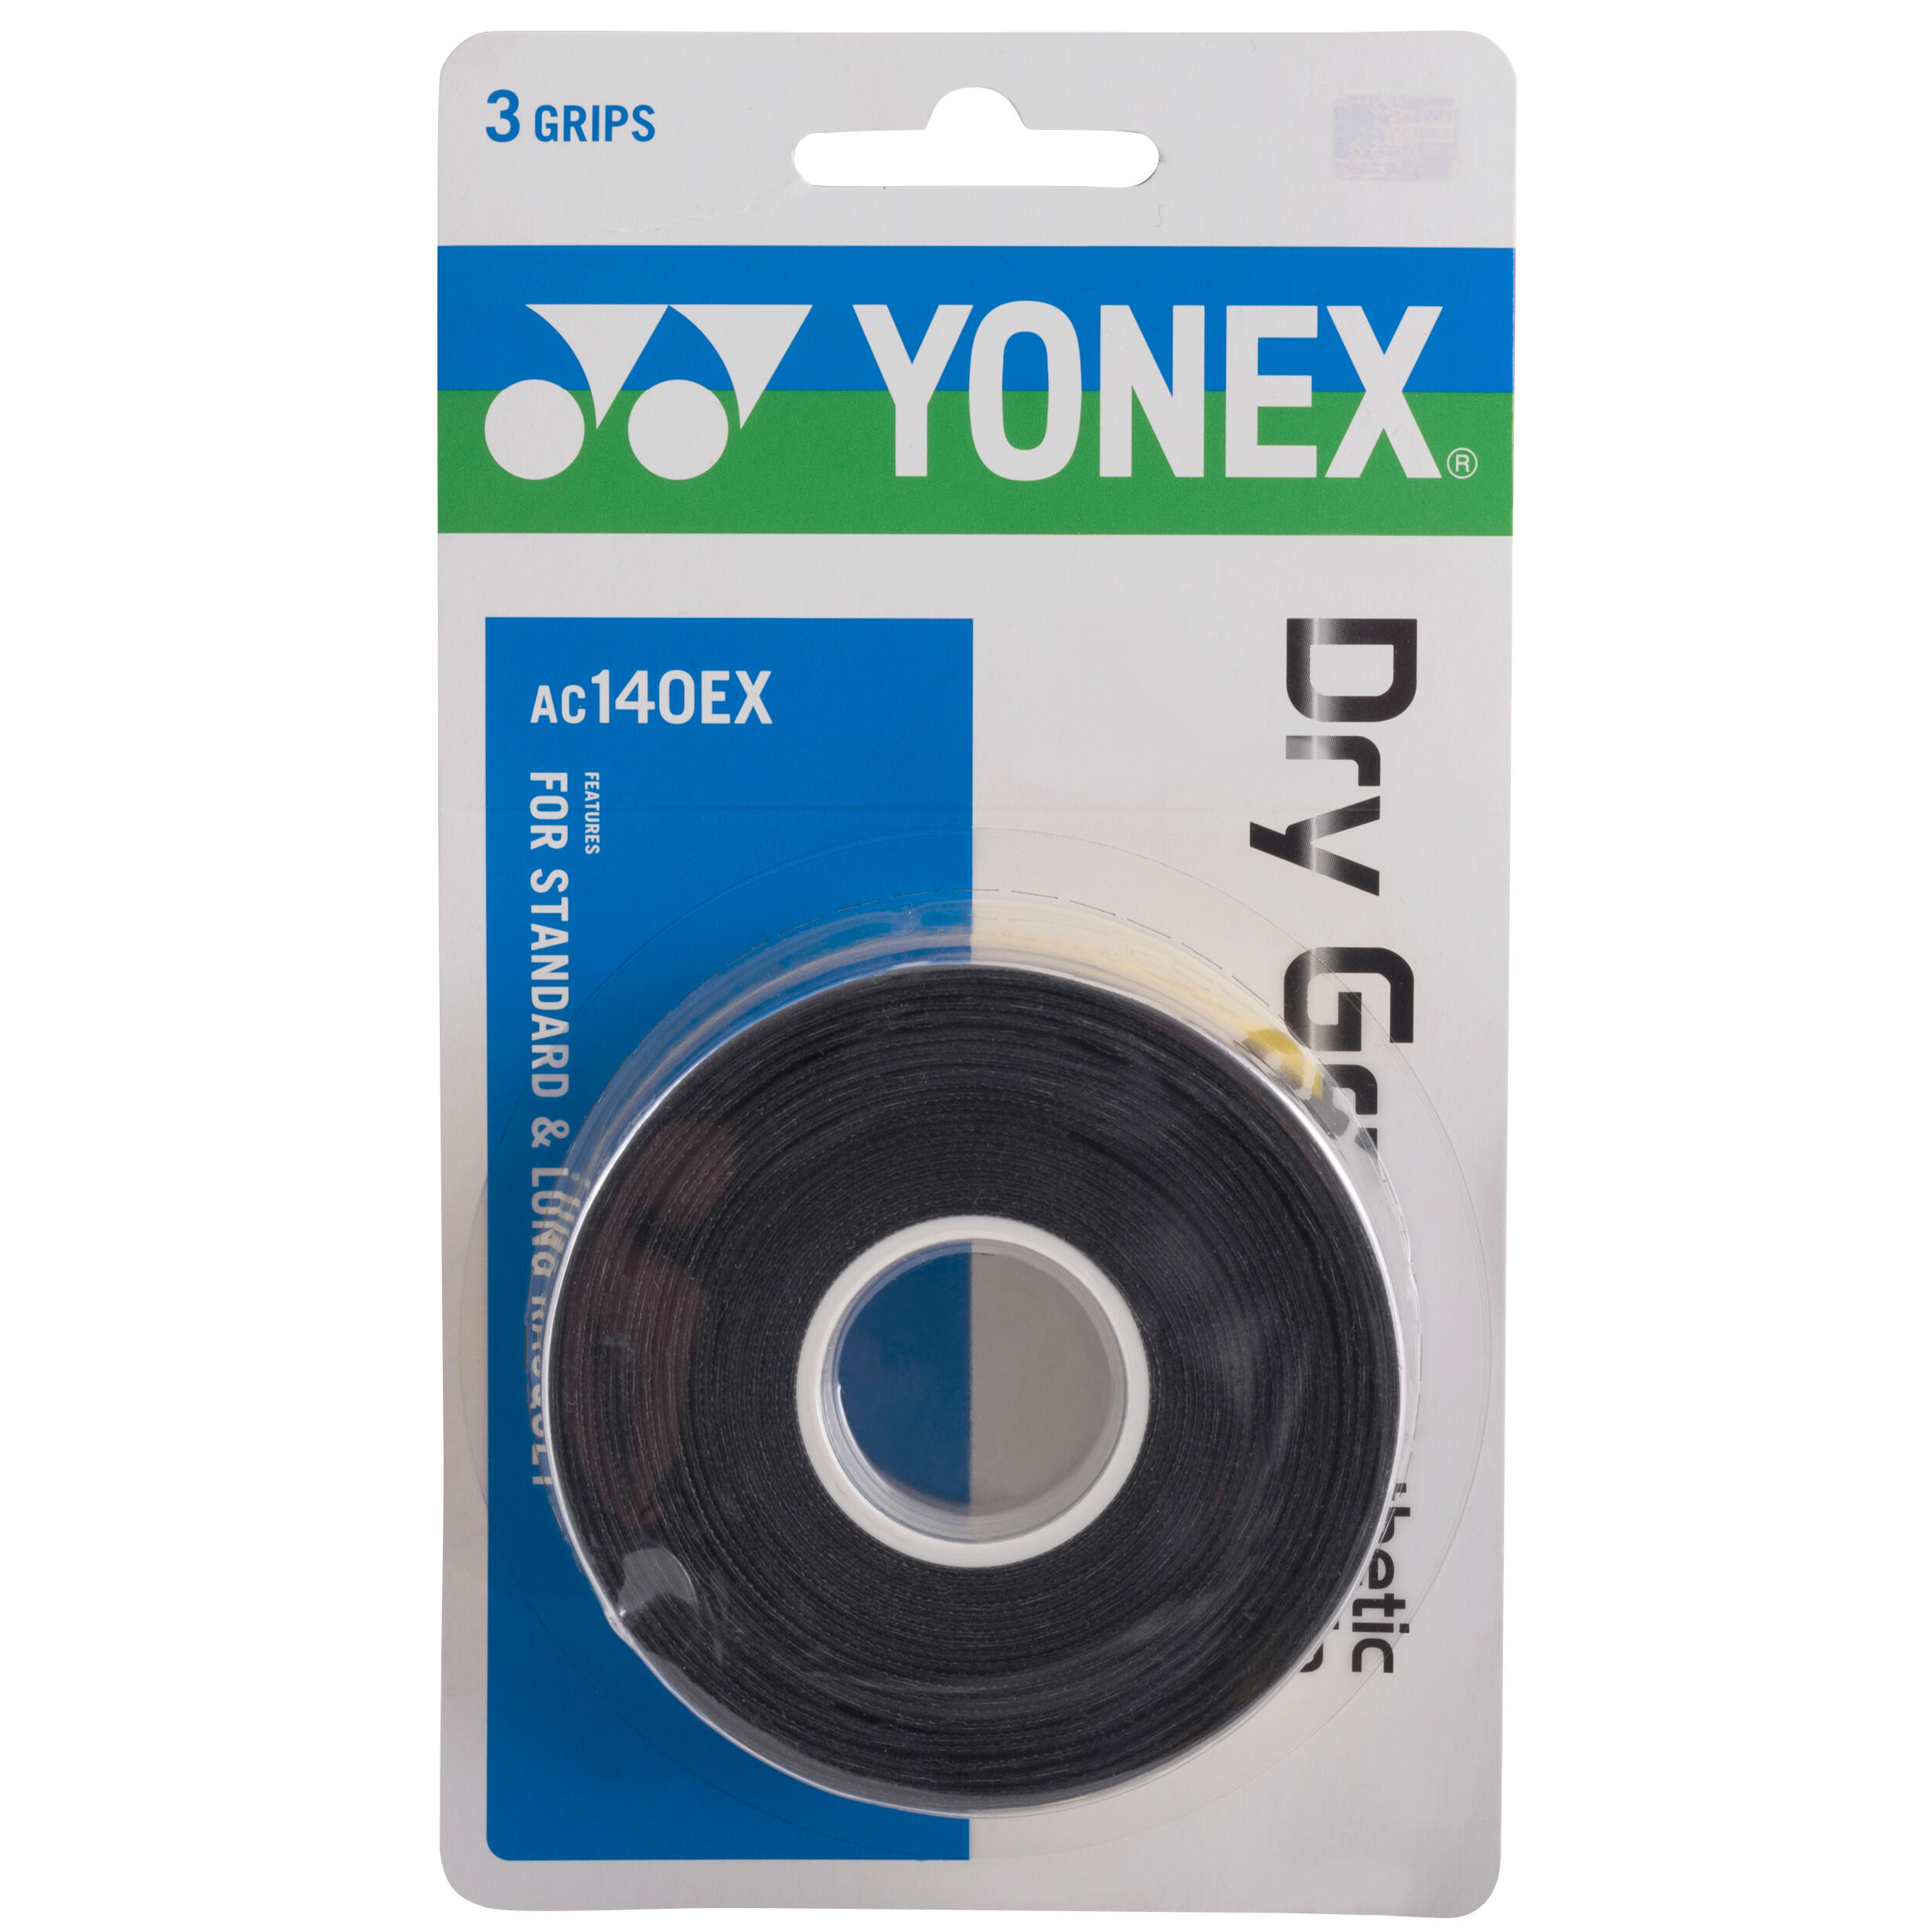 Overgrip YONEX AC 102 x3 negru la Reducere poza